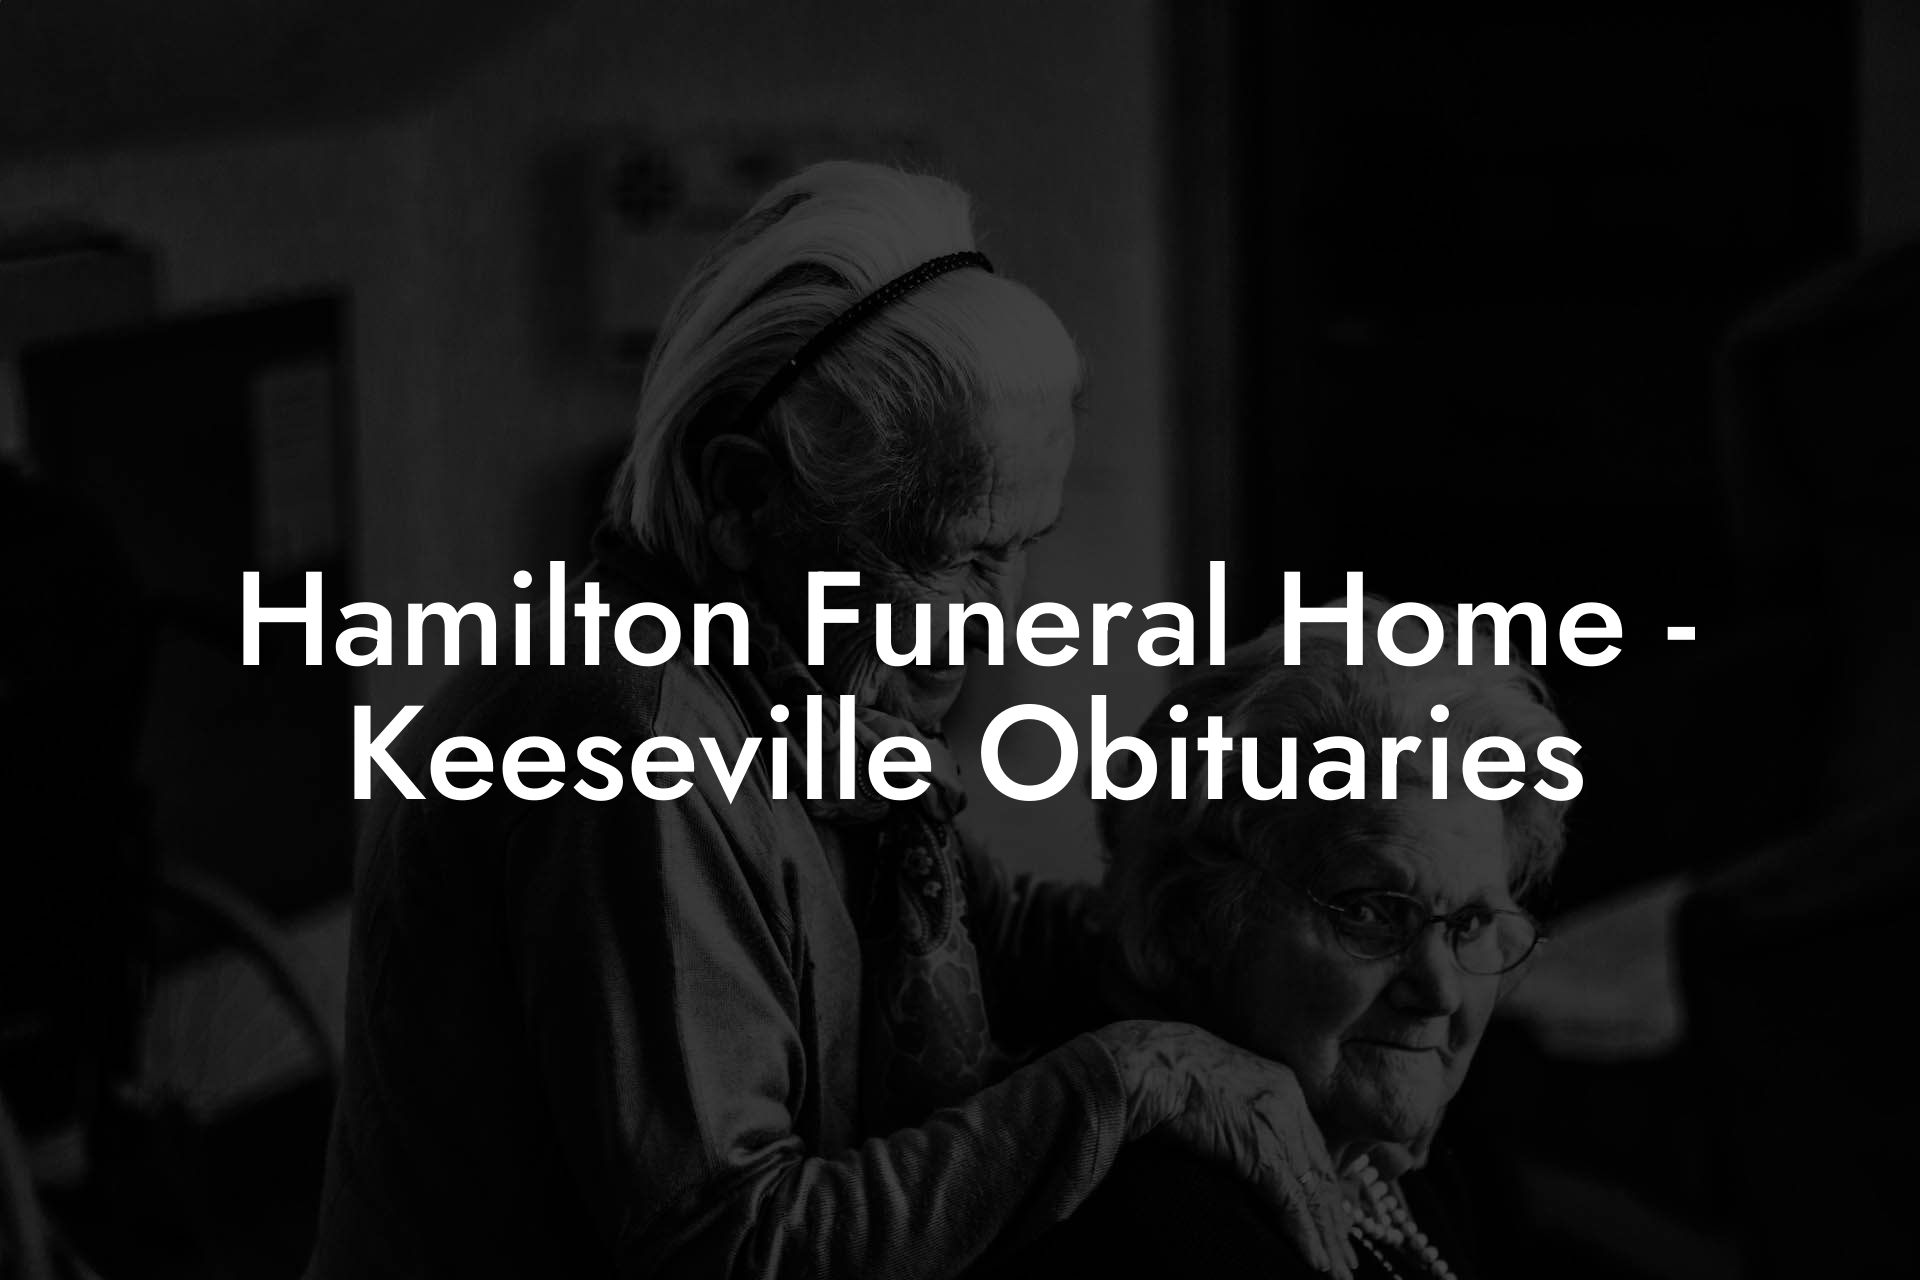 Hamilton Funeral Home - Keeseville Obituaries